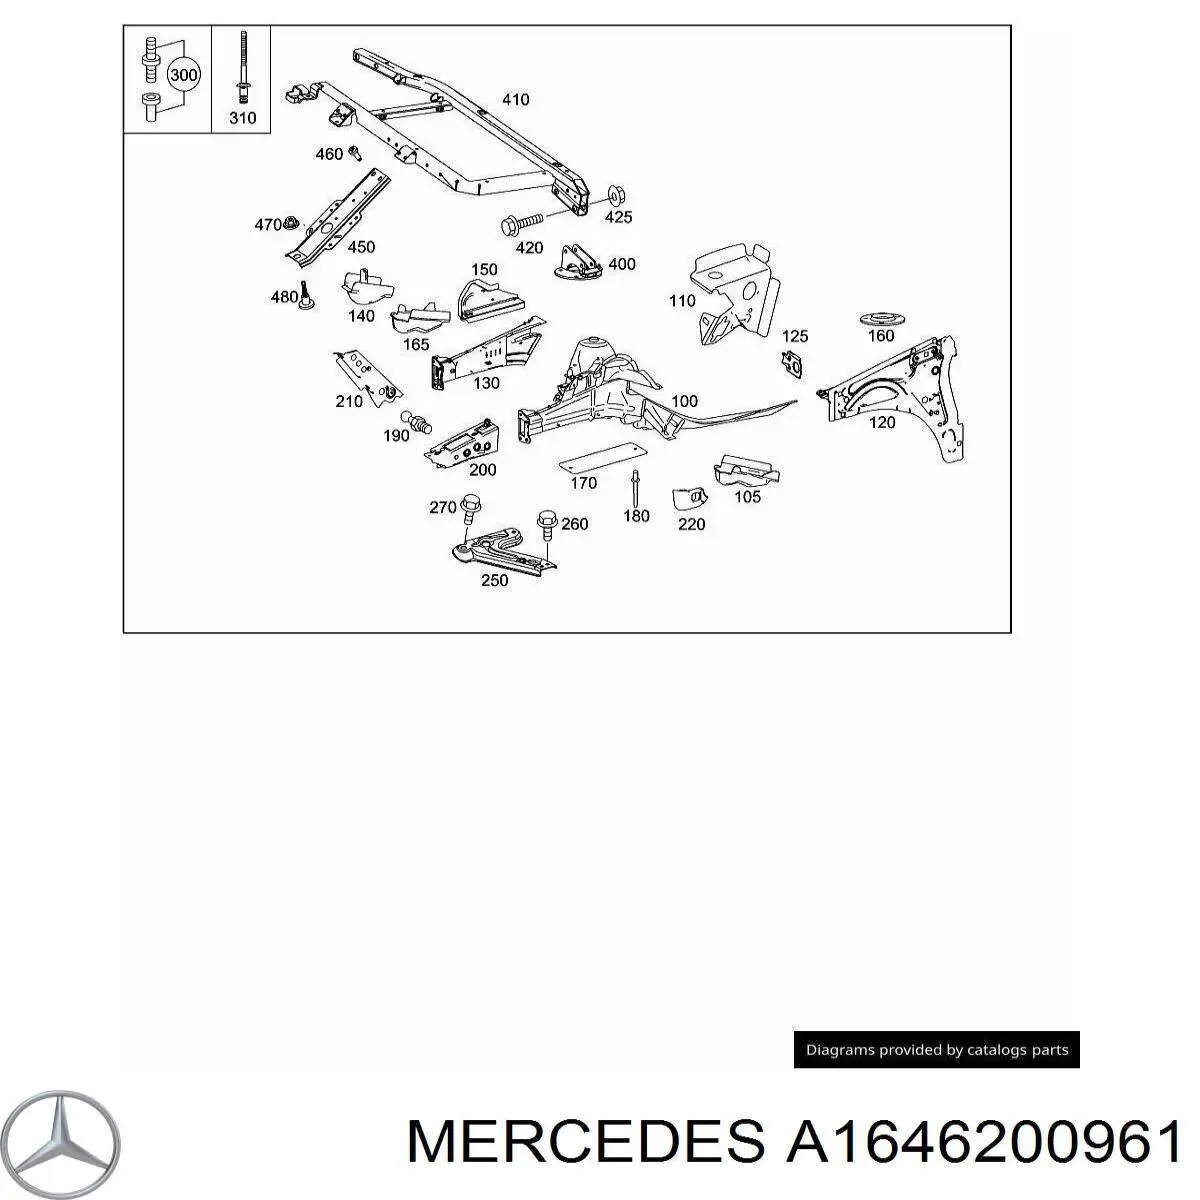 A1646200961 Mercedes larguero delantero izquierdo